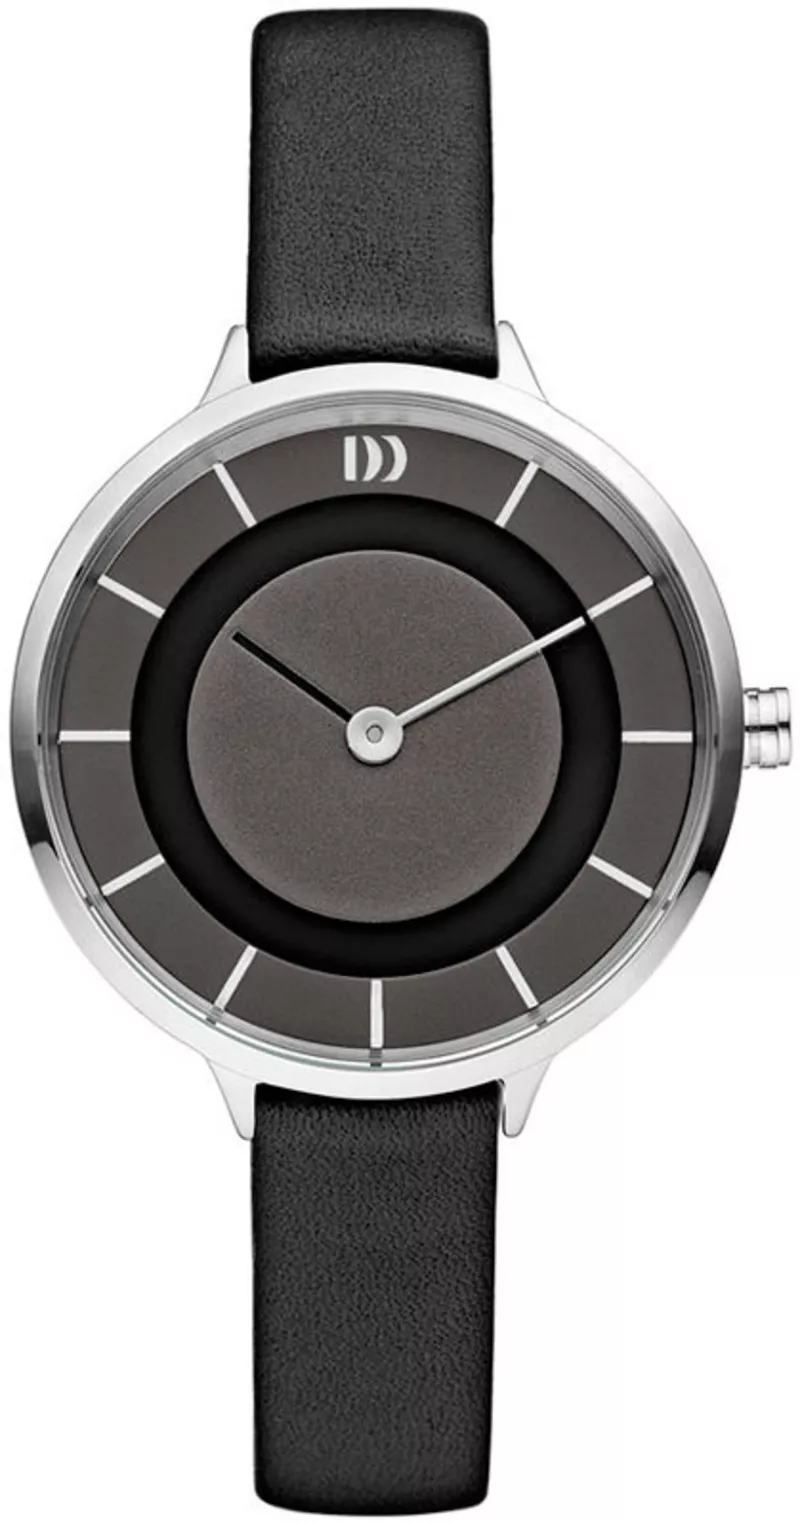 Часы Danish Design IV13Q1165